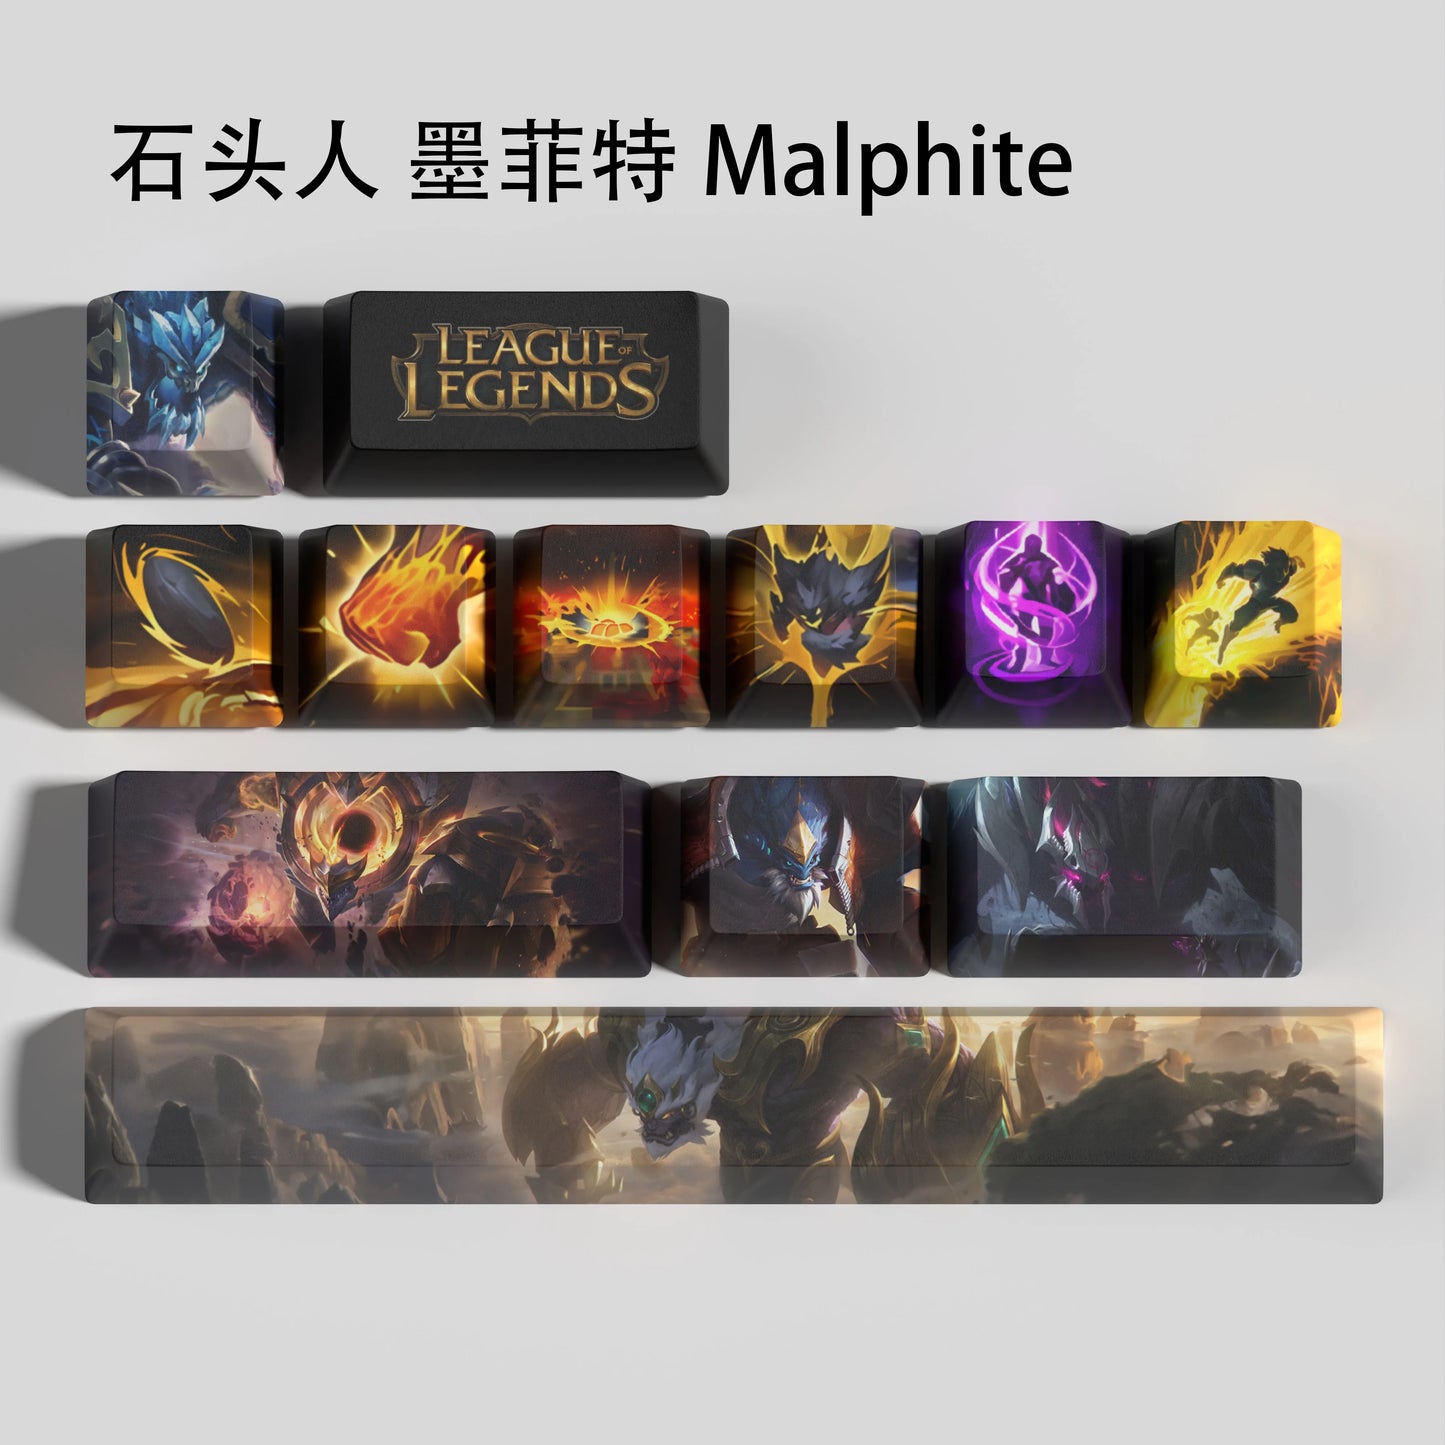 Malphite keycaps